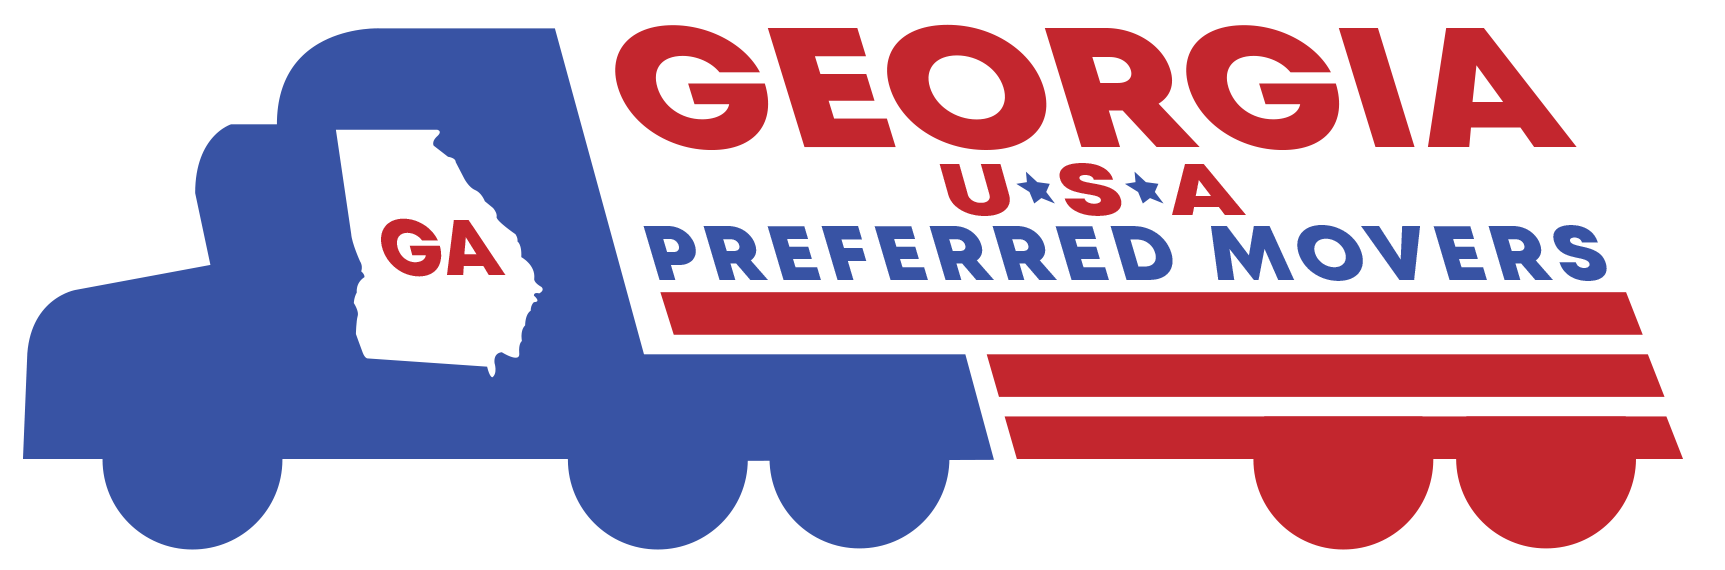 GEORGIA MOVERS